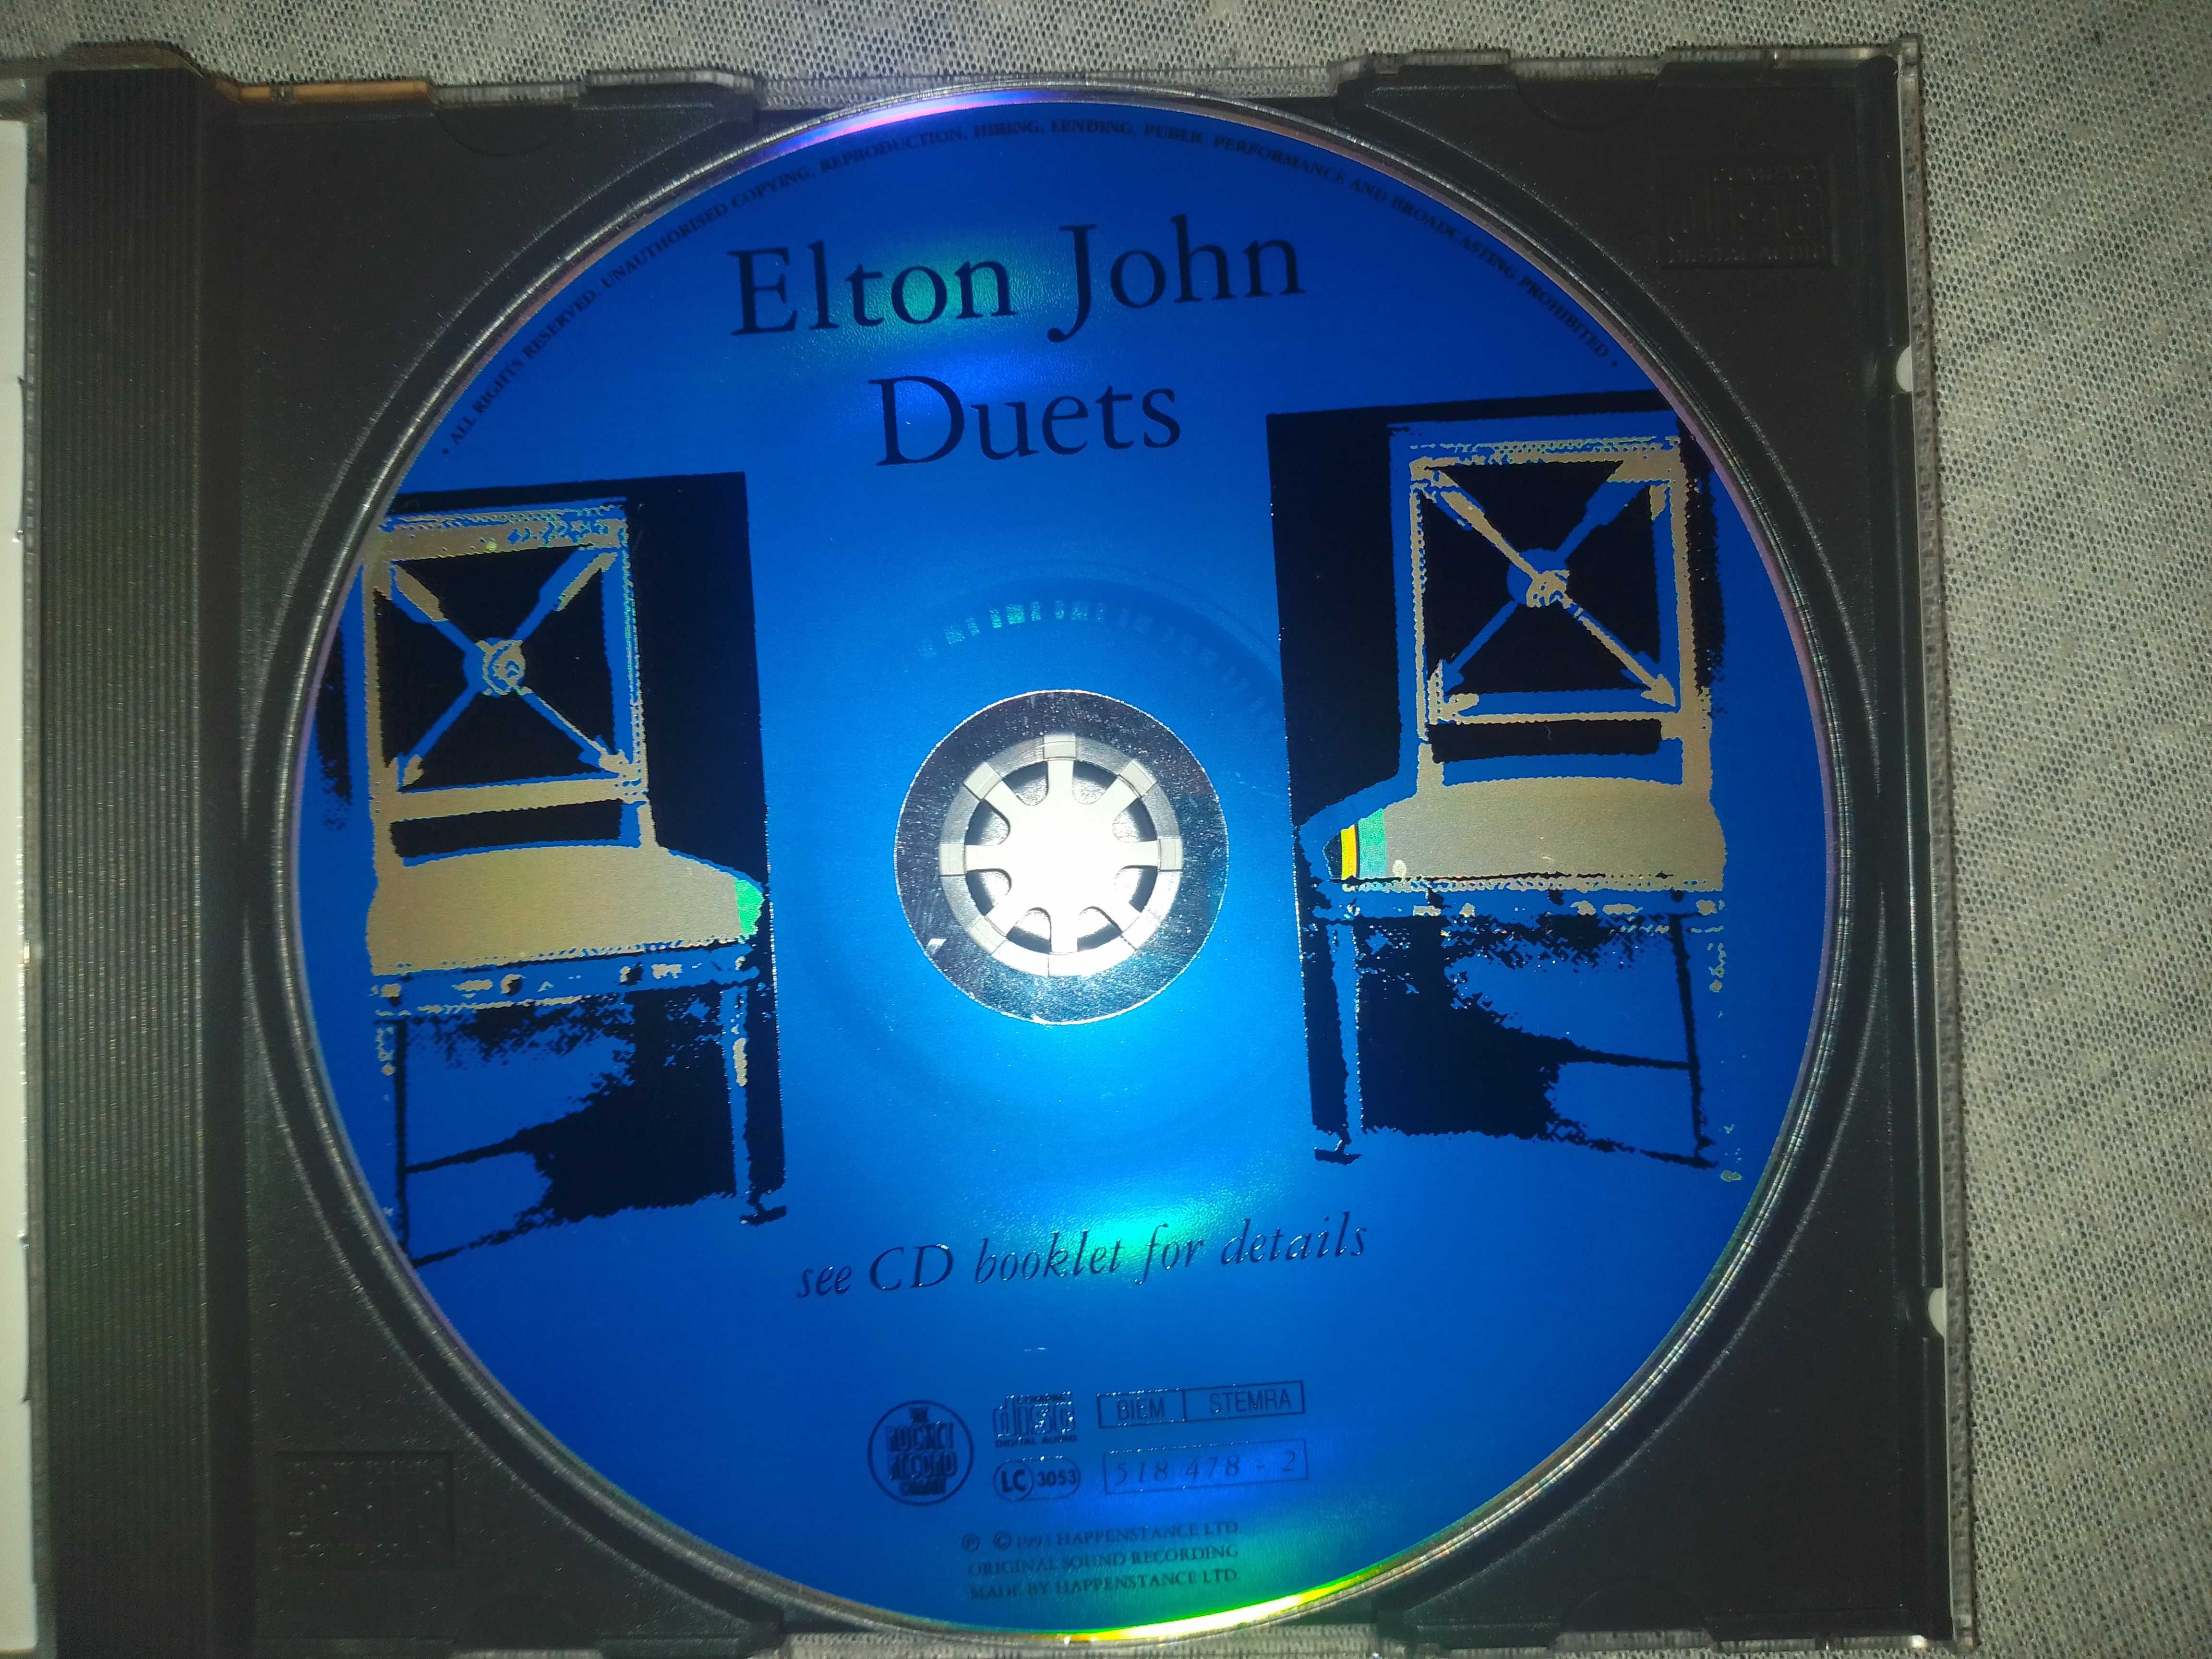 Elton John "Duets" фирменный CD Made In Germany.